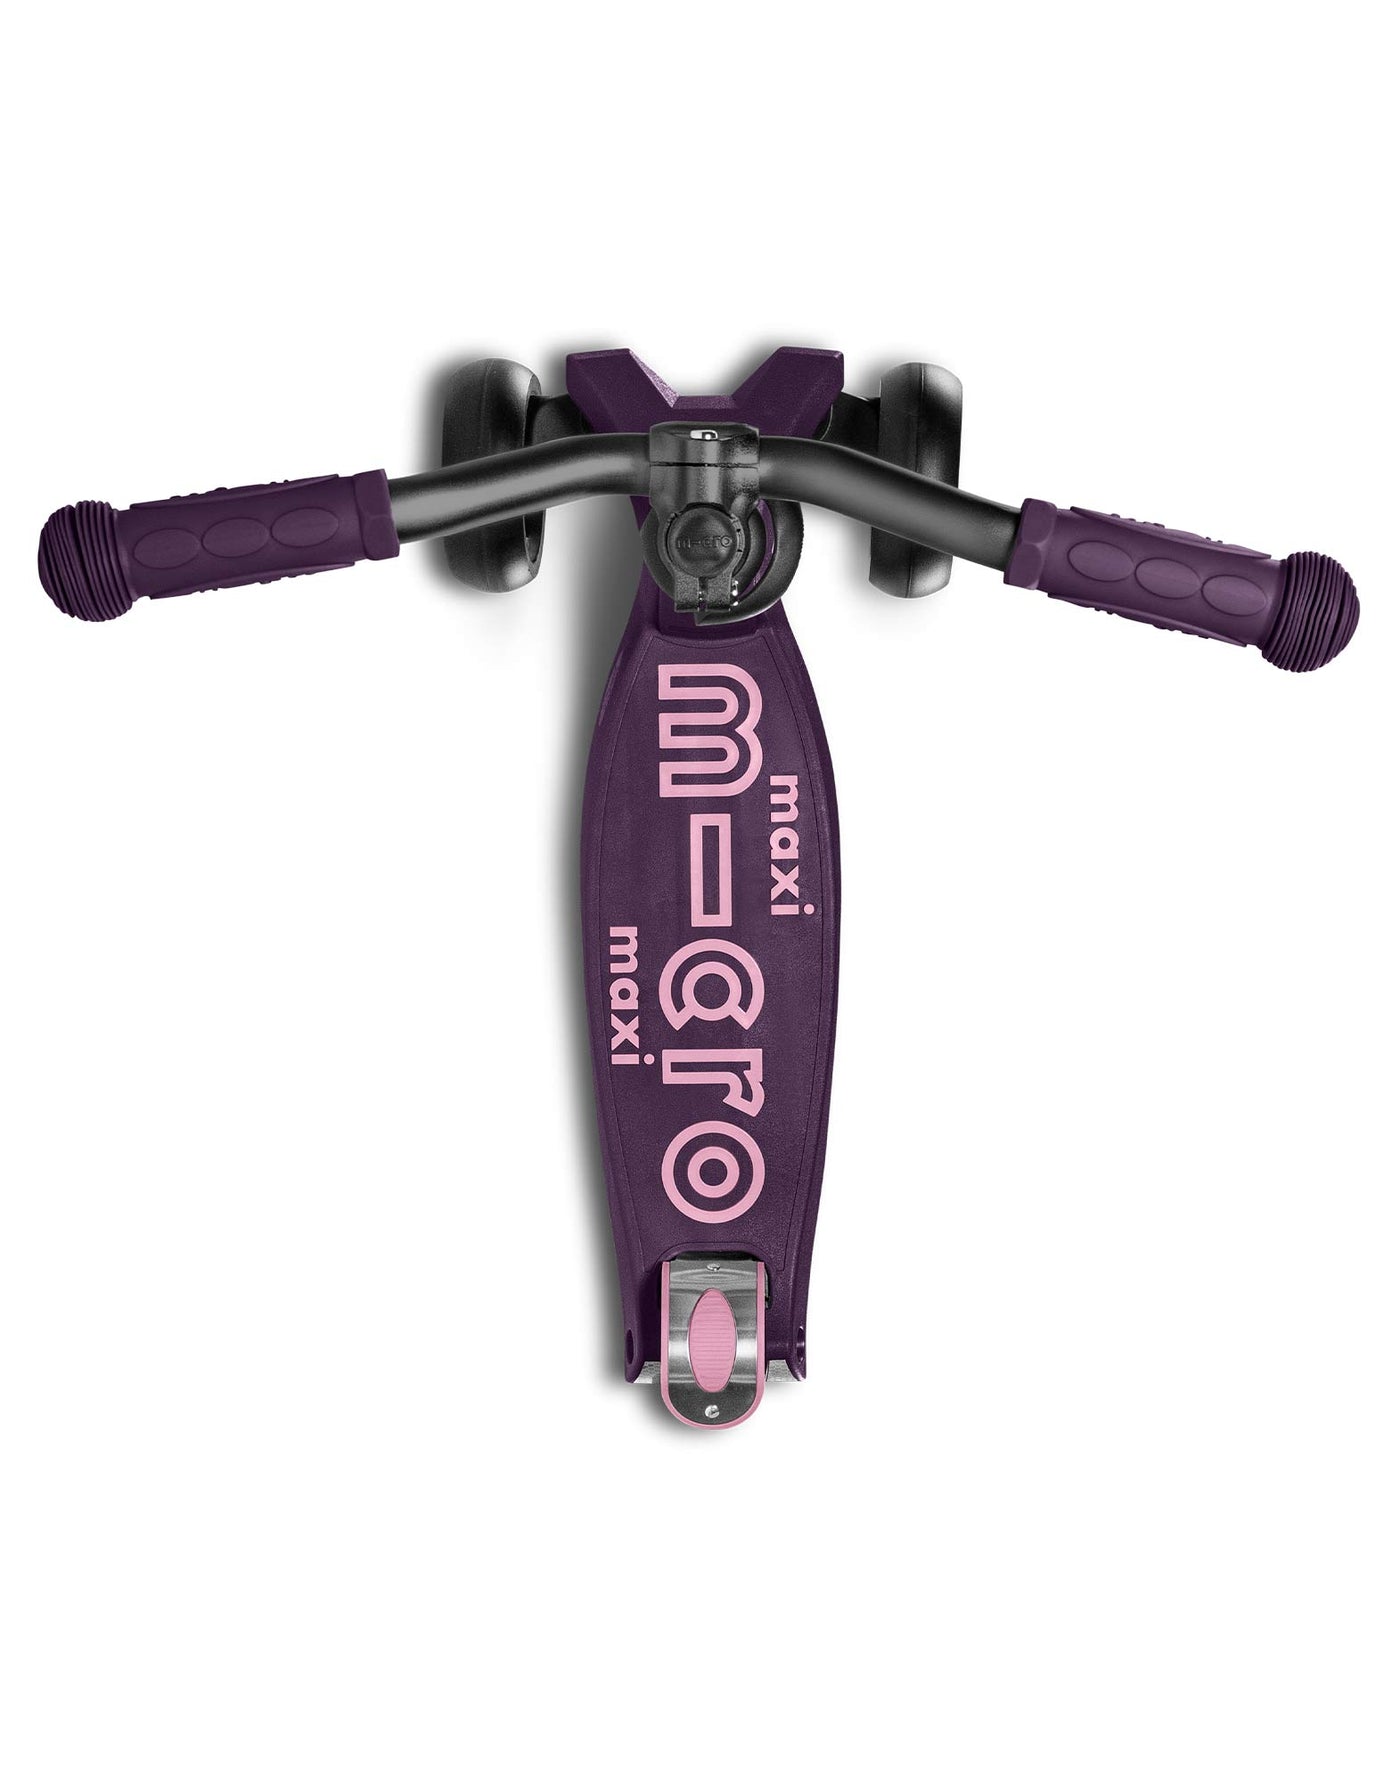 deep purple maxi deluxe pro kids 3 wheel scooter deck